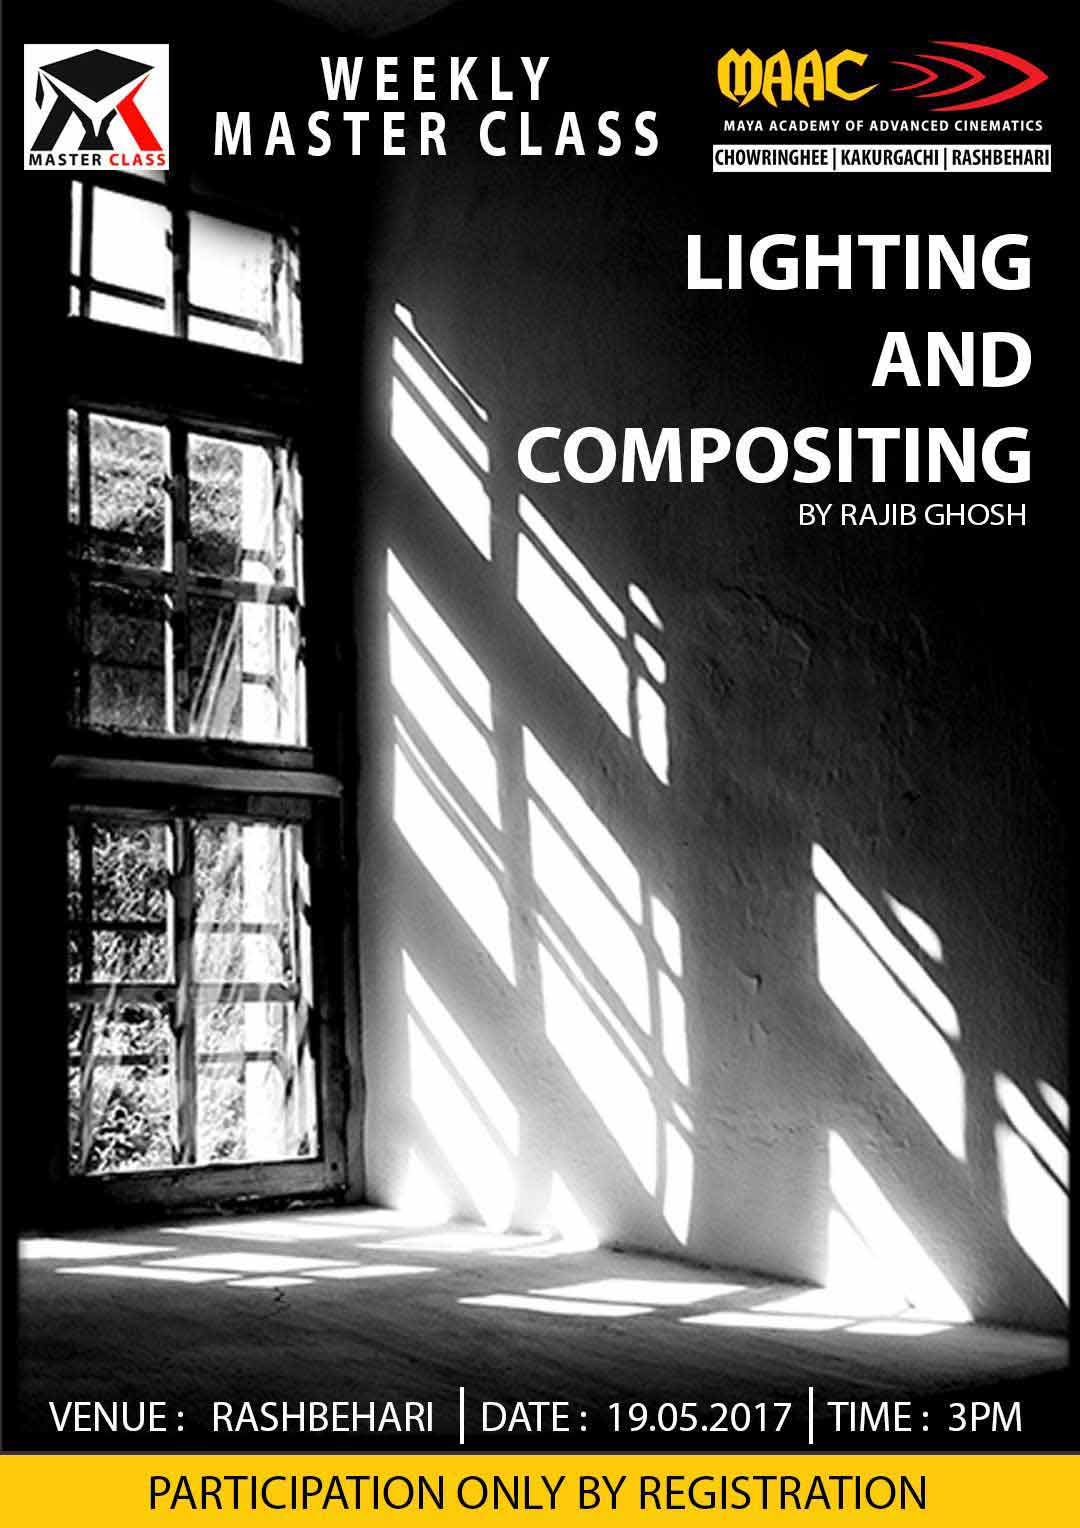 Weekly Master Class on Lighting and Compositing - Rajib Ghosh